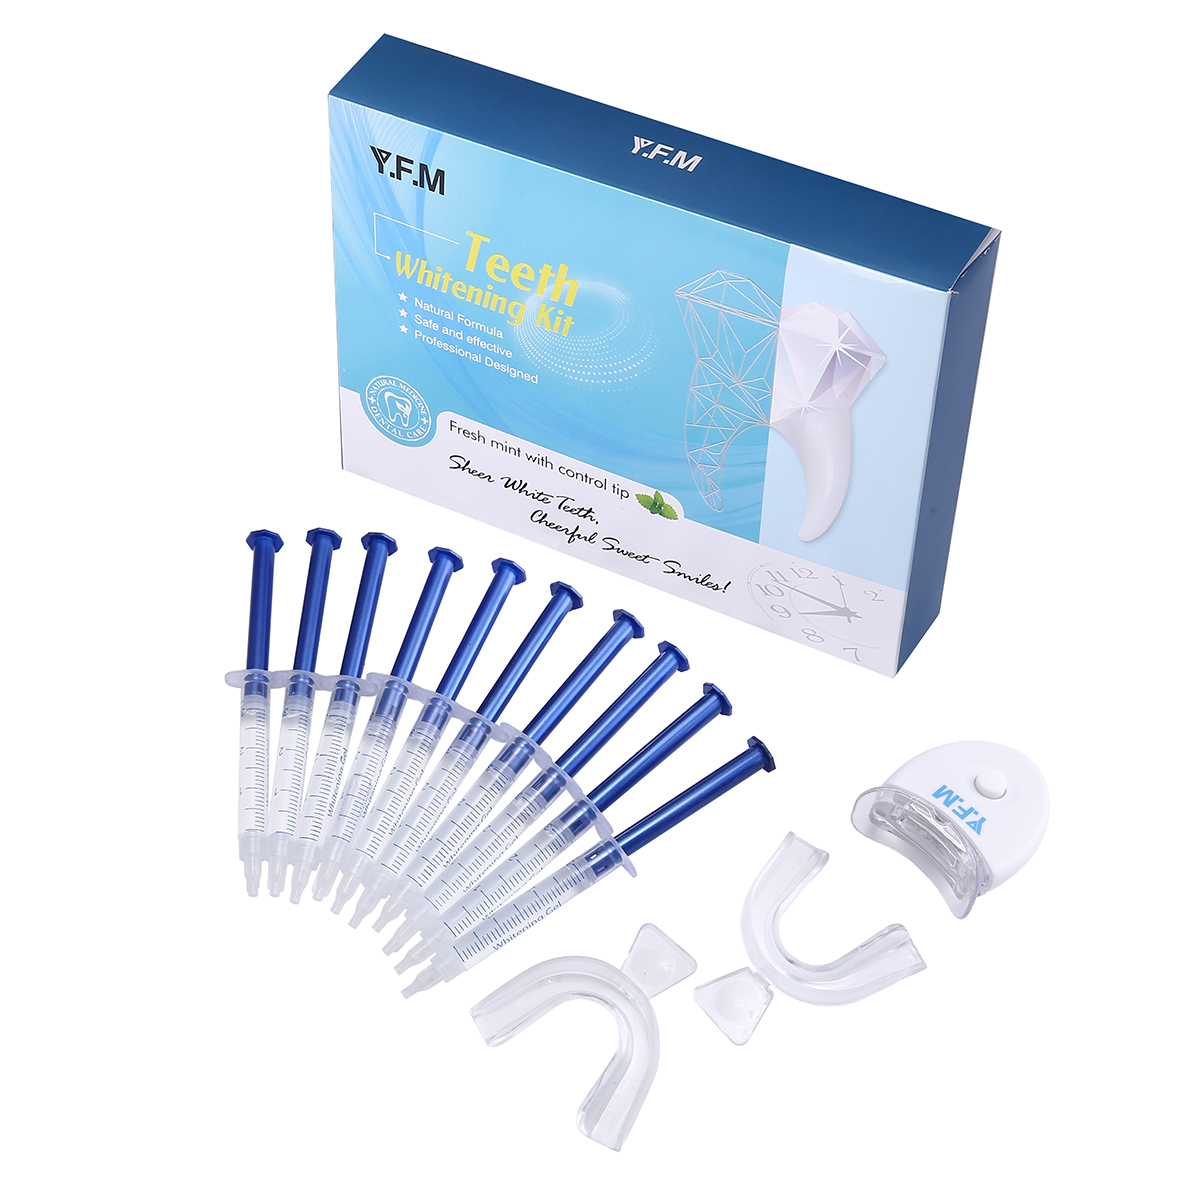 

Y.F.M Teeth Whitening Kit Home Teeth Whitener System